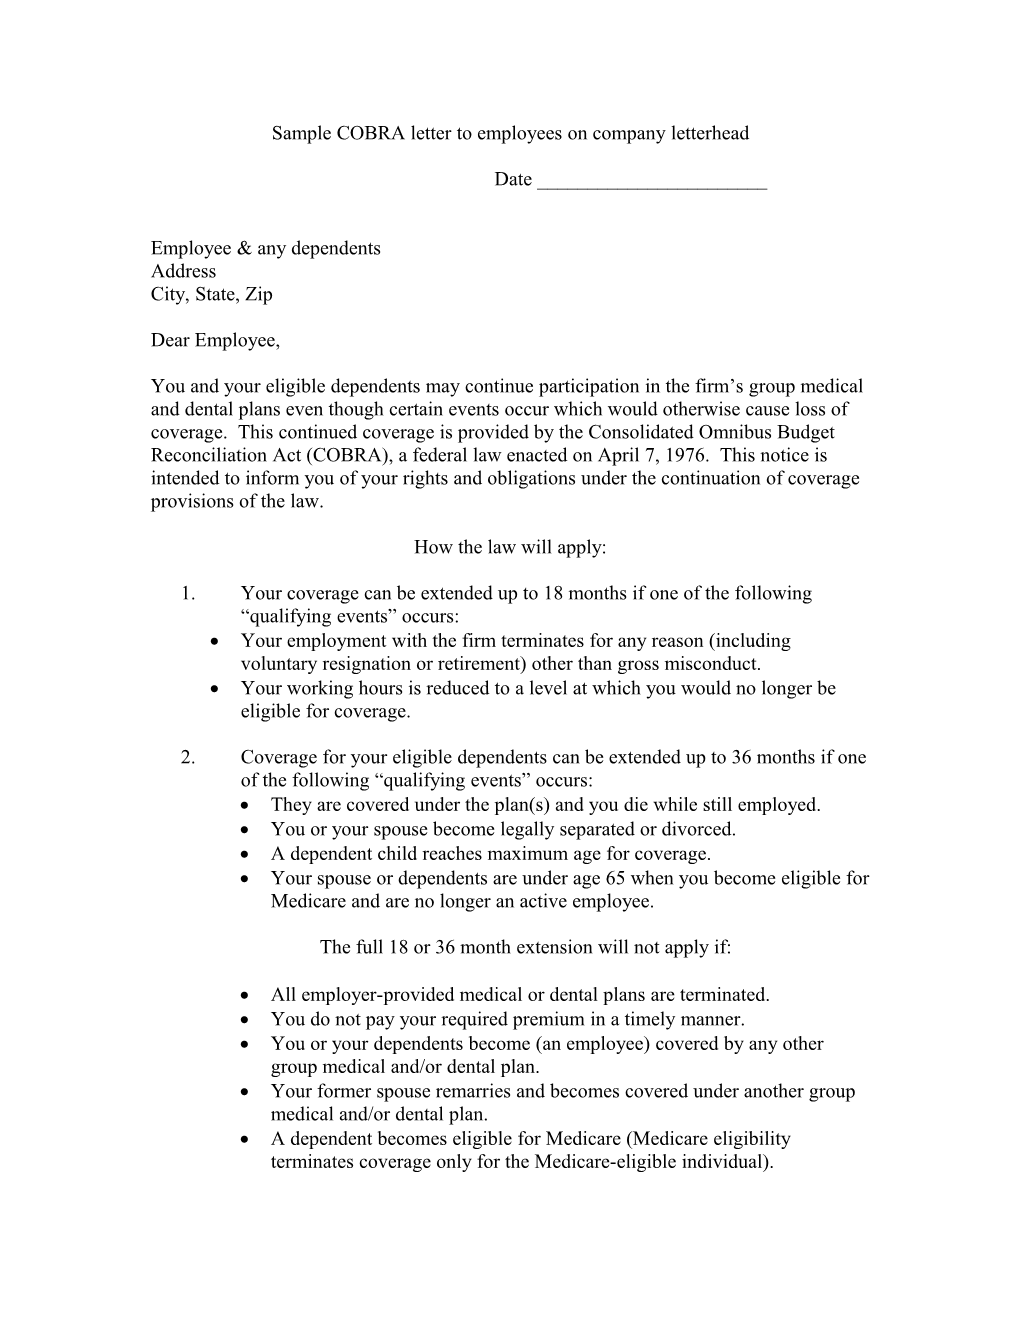 Sample COBRA Letter to Employees on Company Letterhead